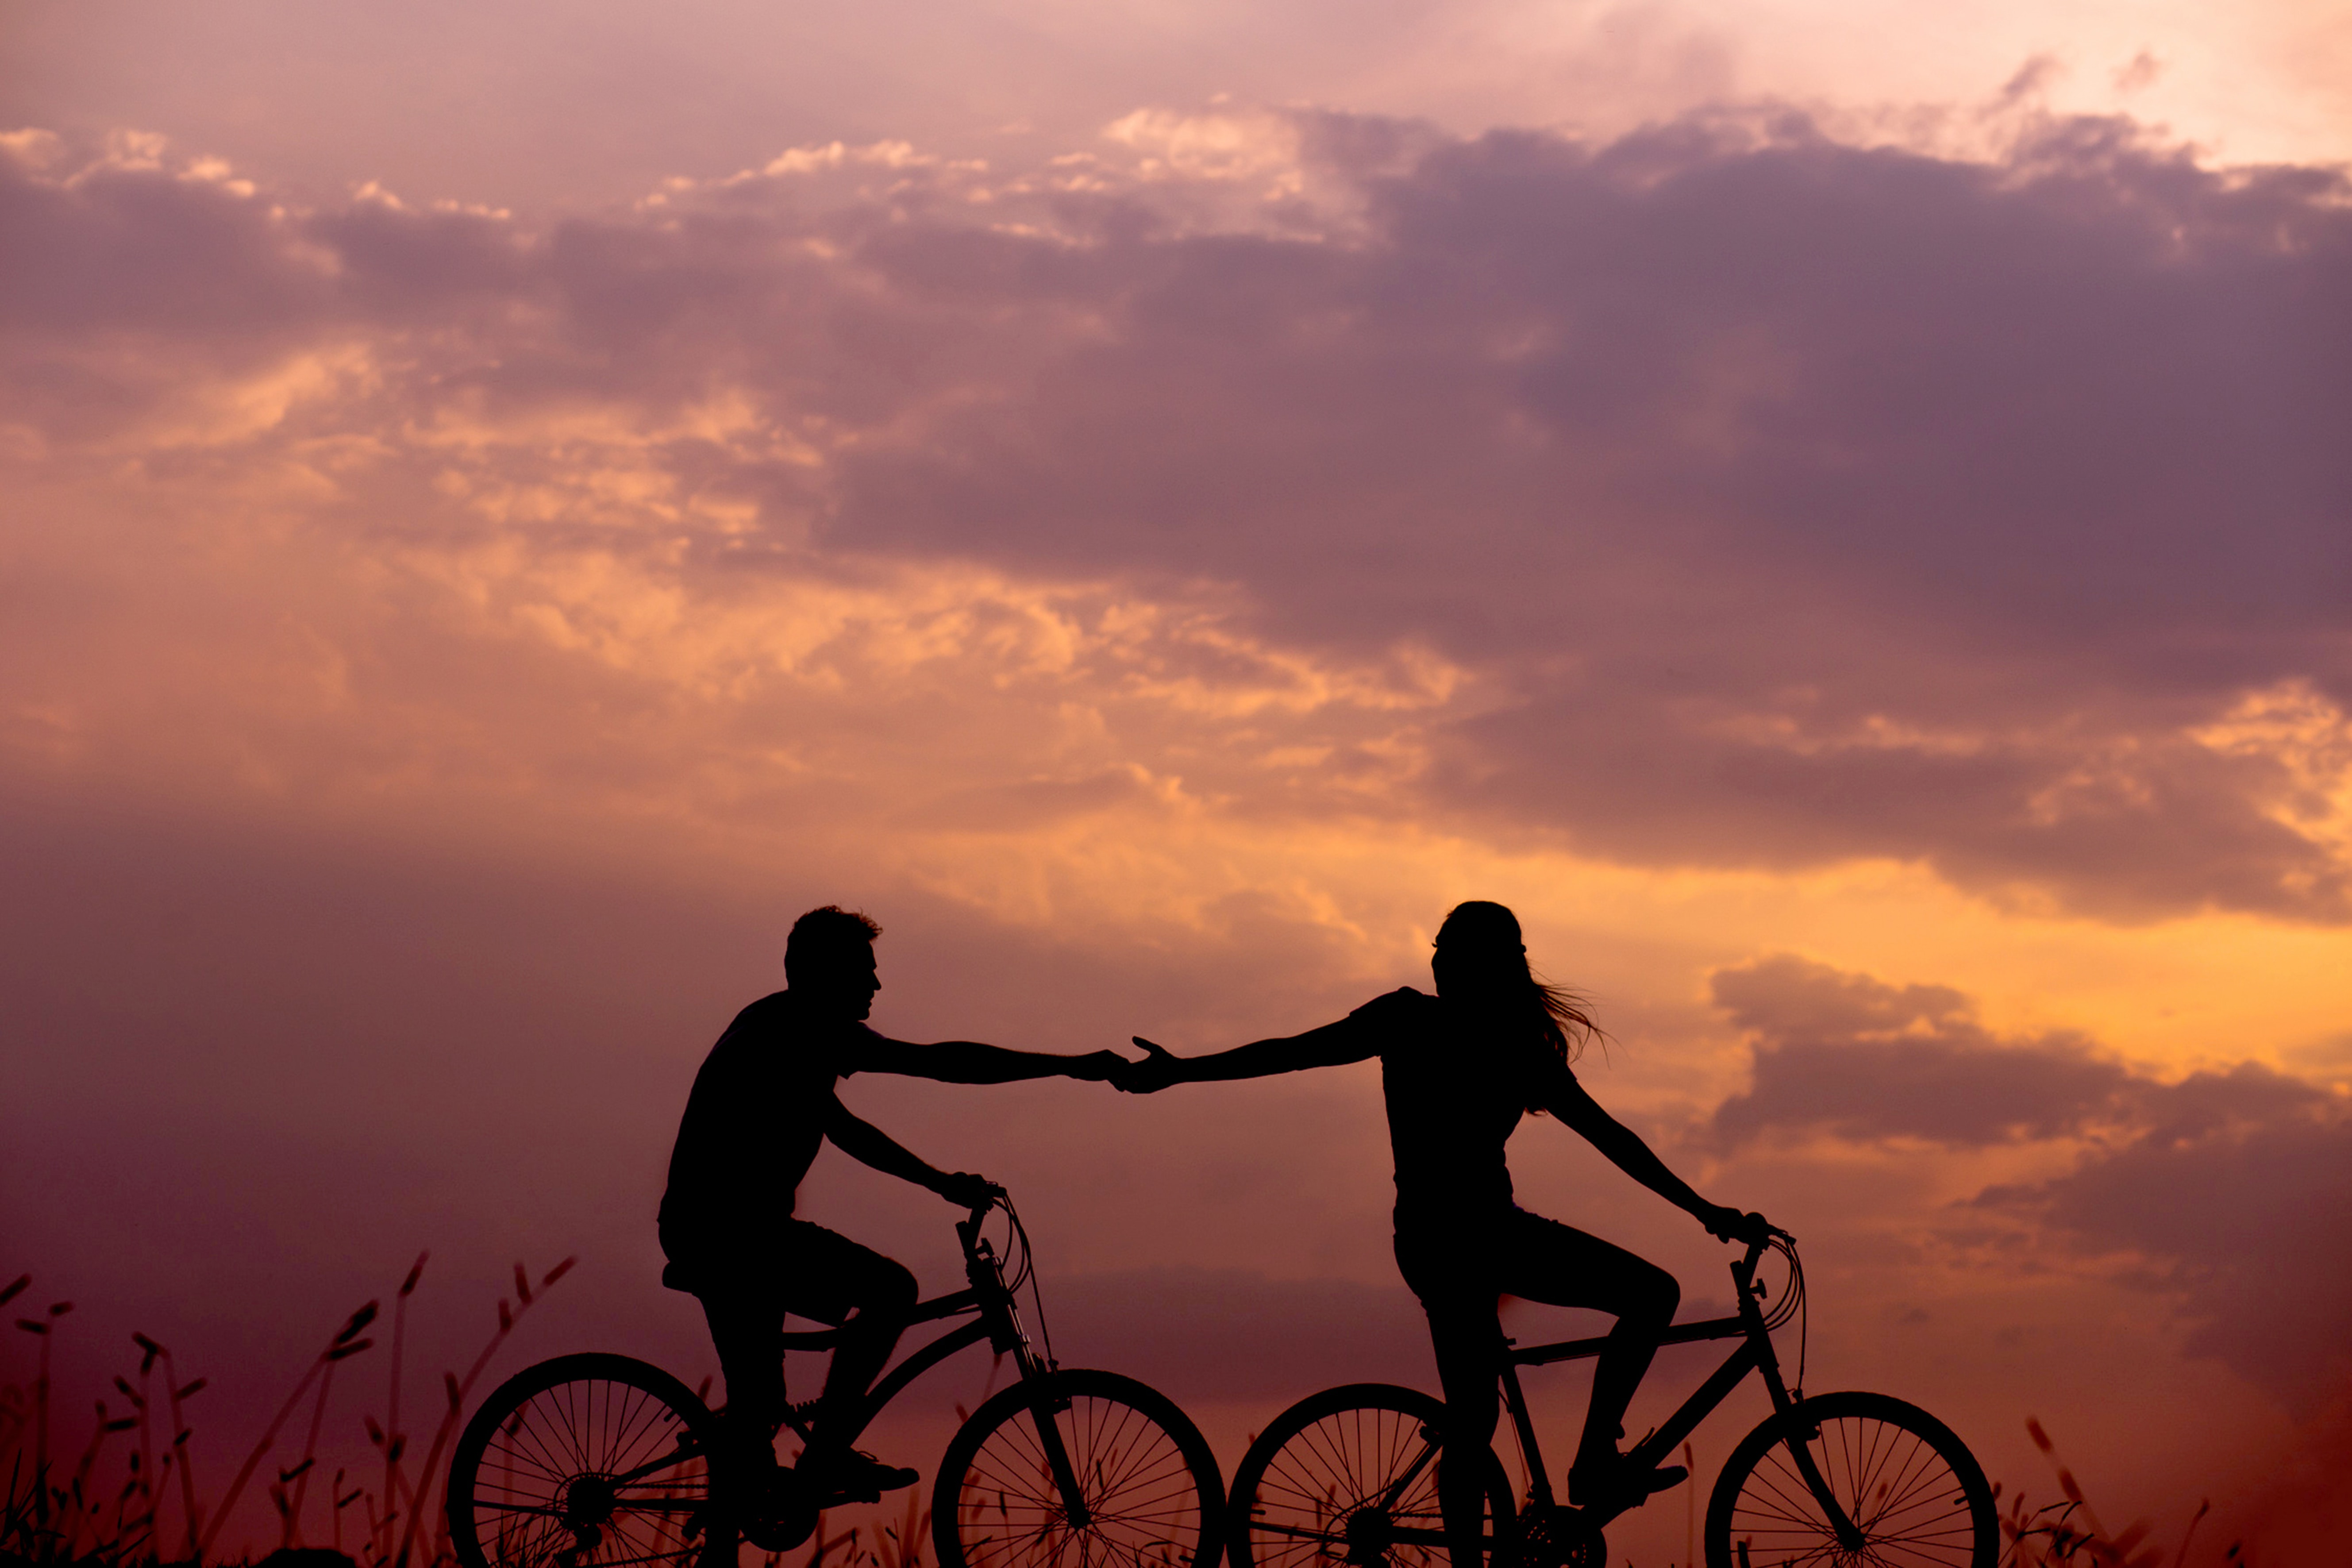 A couple riding bikes together. | Source: Unsplash